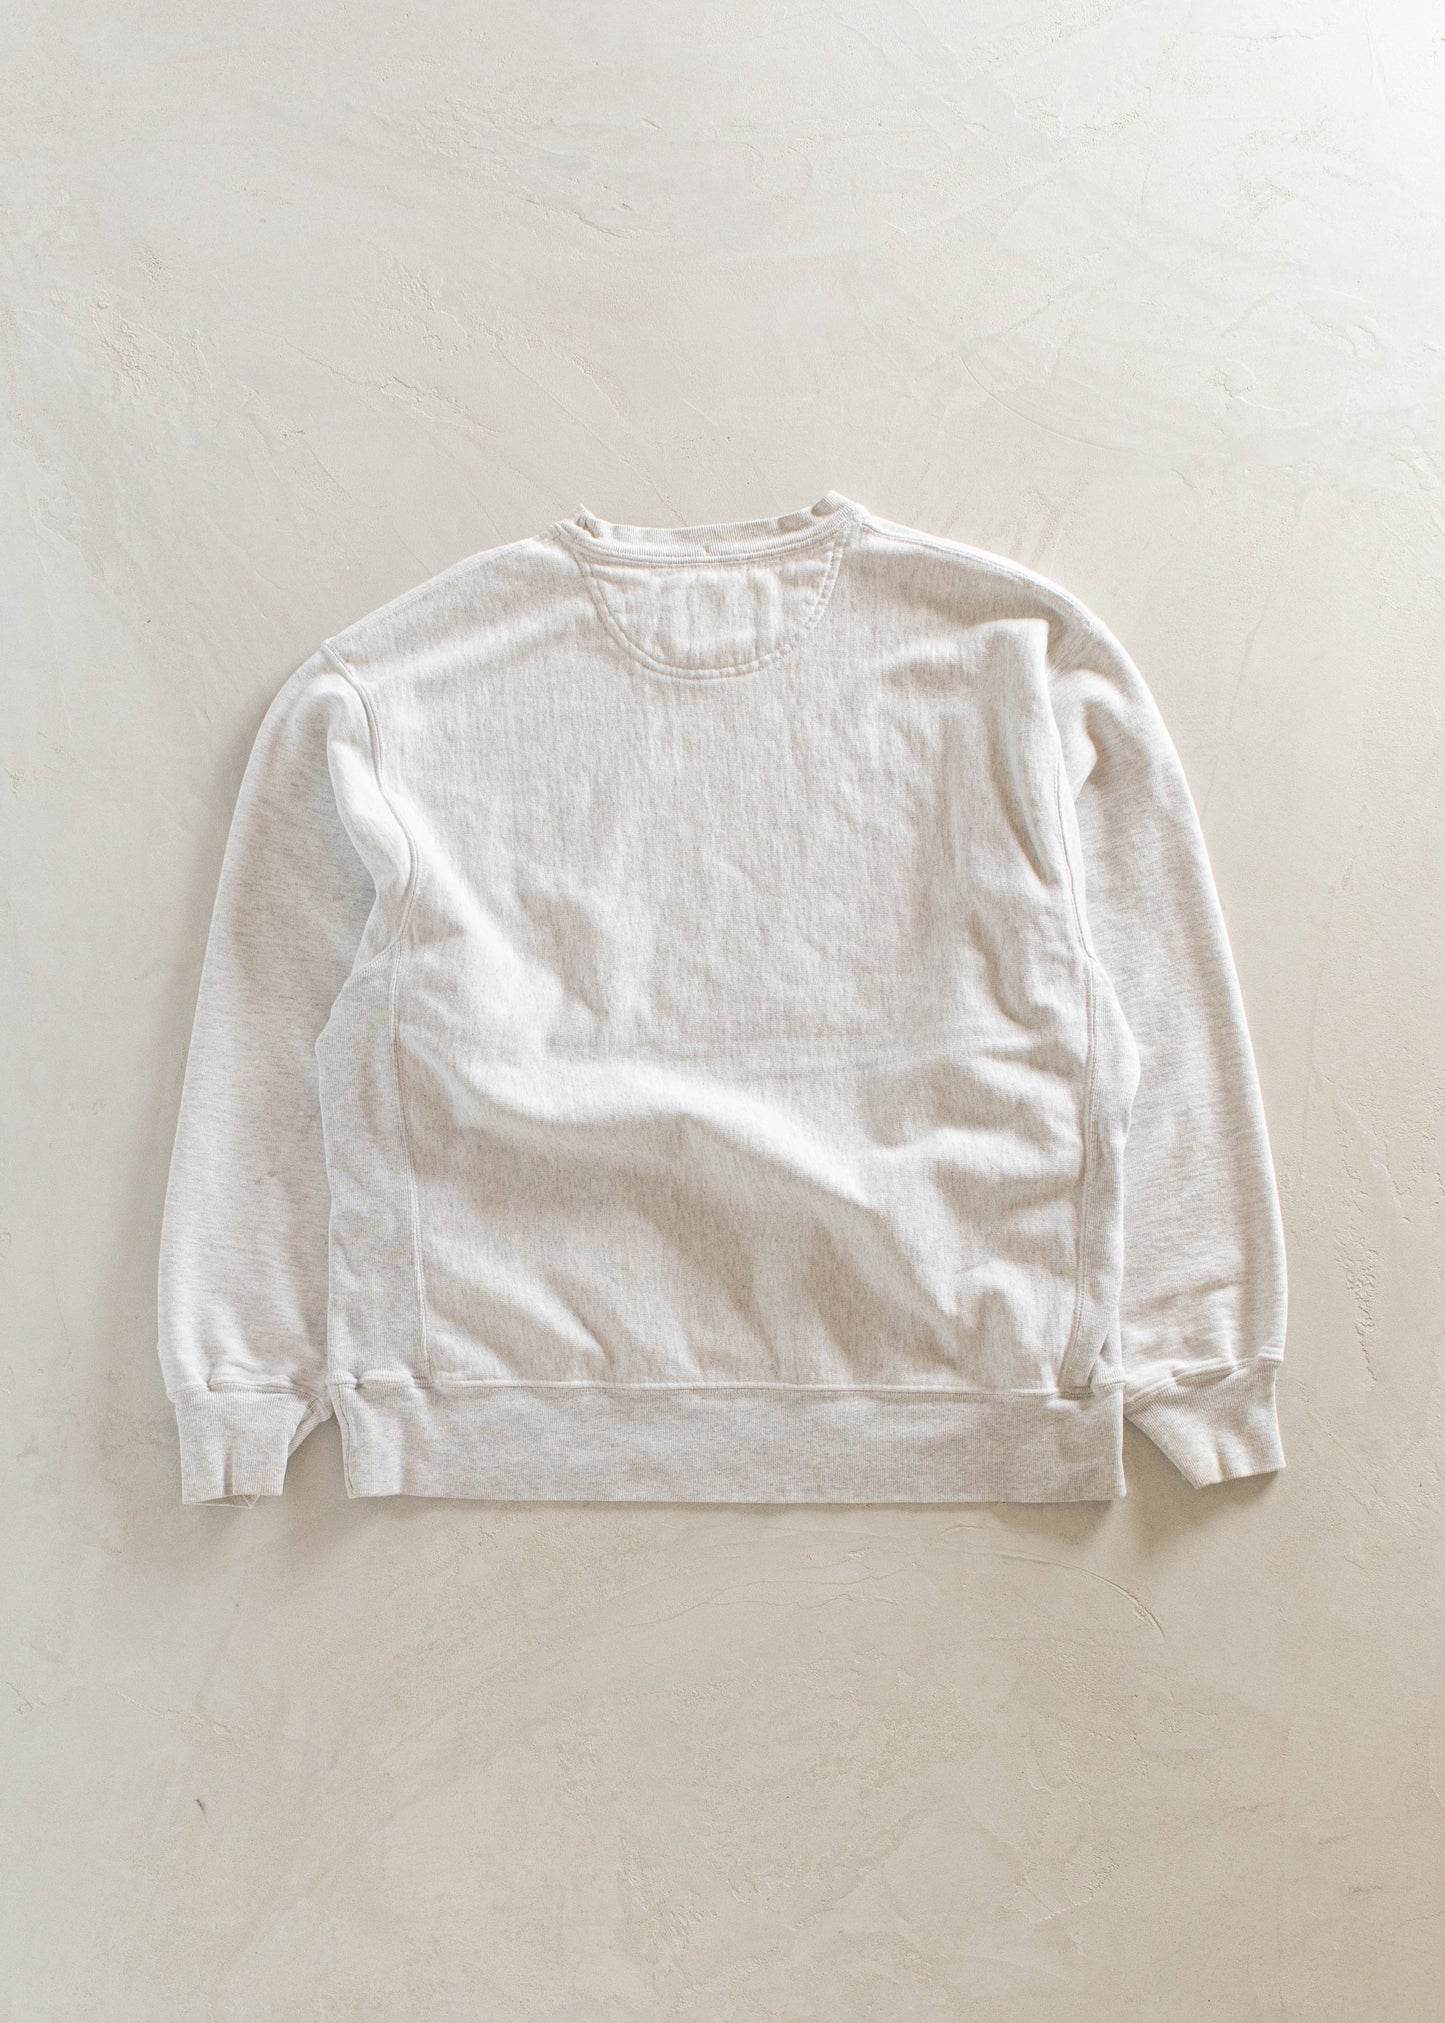 1990s Champion Keene State College Reverse Weave Sweatshirt Size L/XL